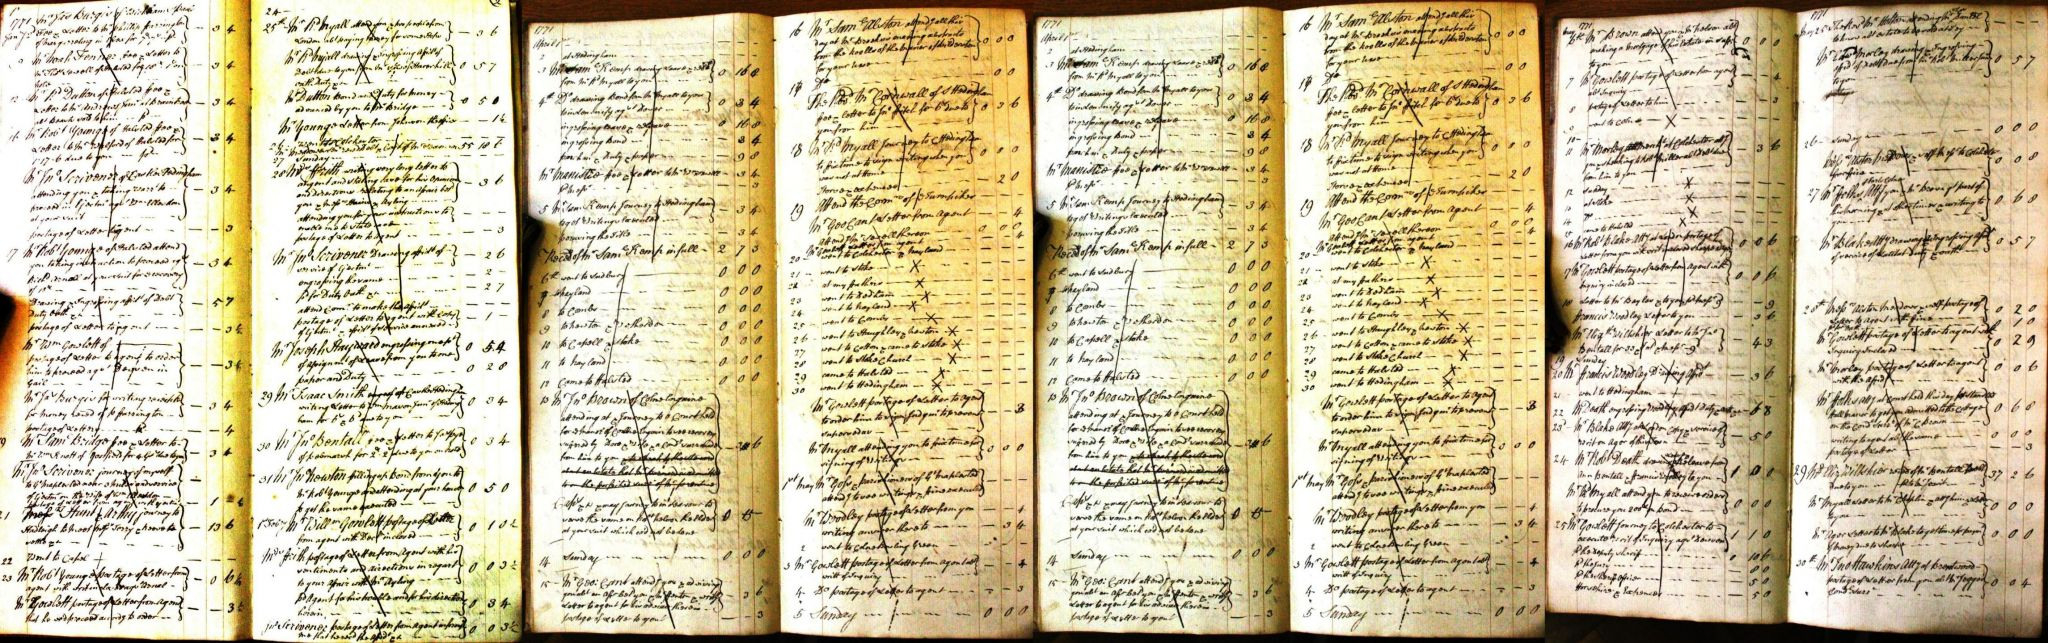 The Carolina Charter Of 1663 Worksheet Answers